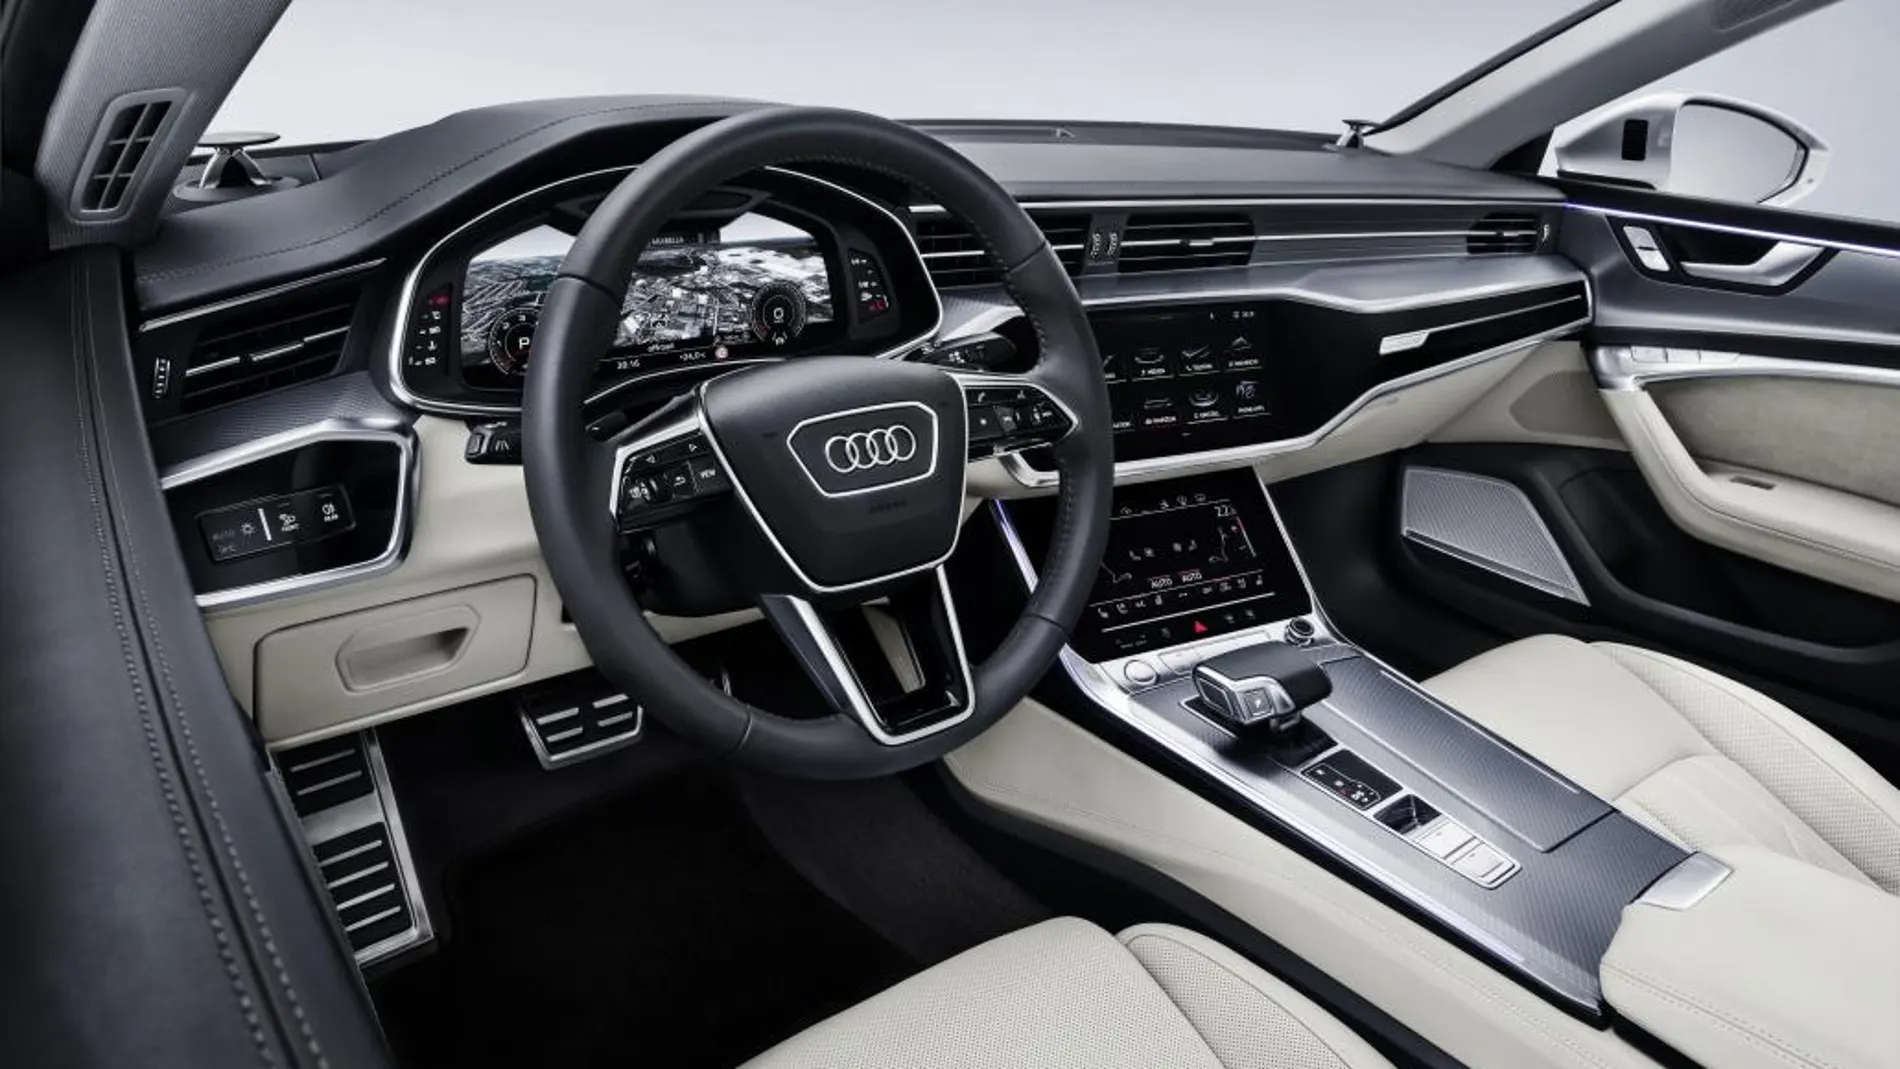 Nuevo Audi A7 Sportback: la imagen deportiva de Audi en la clase superior